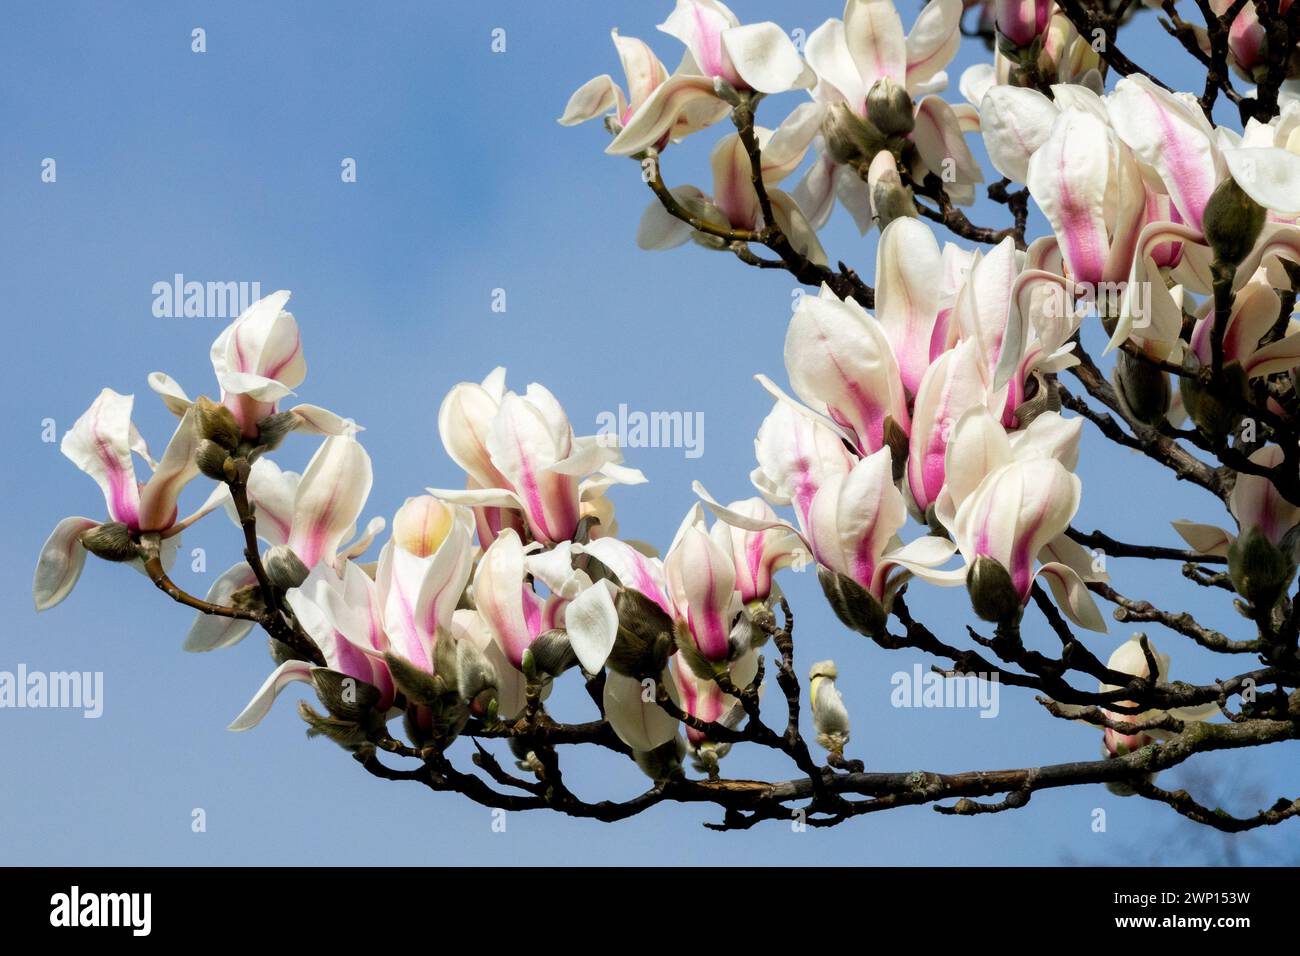 Zen Magnolienbaumblüten Zweige Magnolia zenii blühende Winterblüten Magnolienbaumzweige Stockfoto